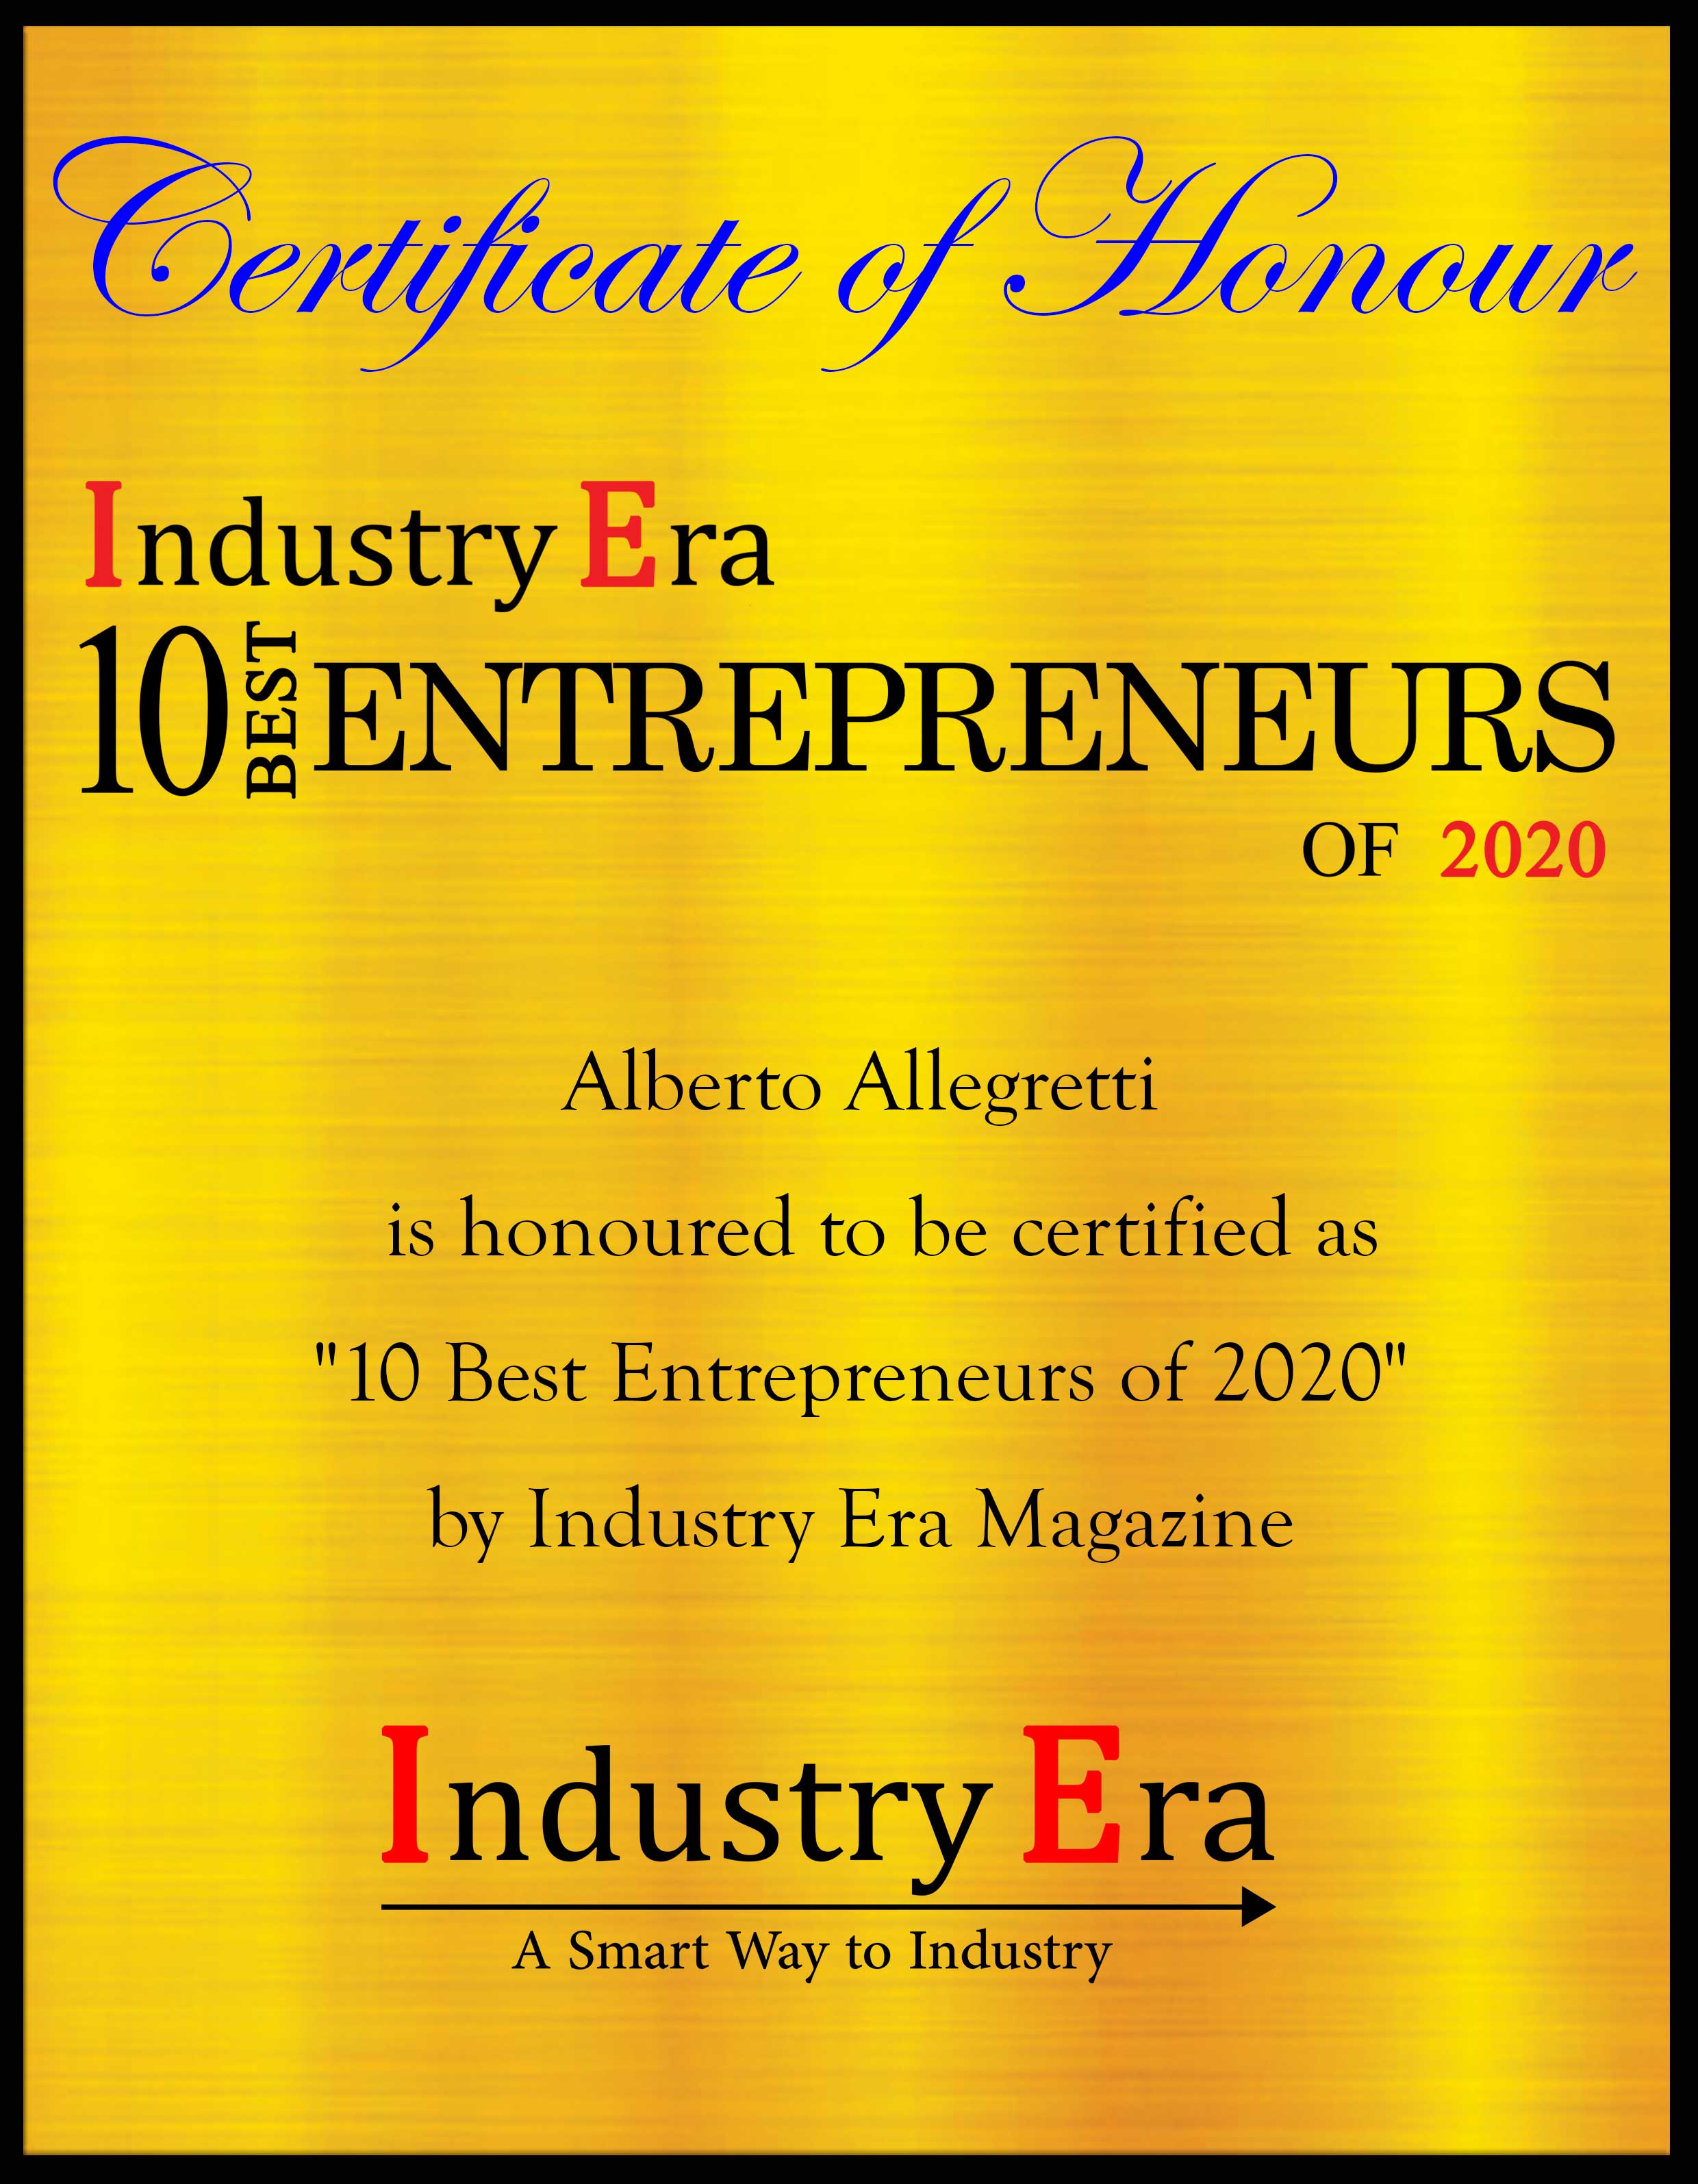 Alberto Allegretti, Owner of Mitech, 10 Best Entrepreneurs of Year 2020